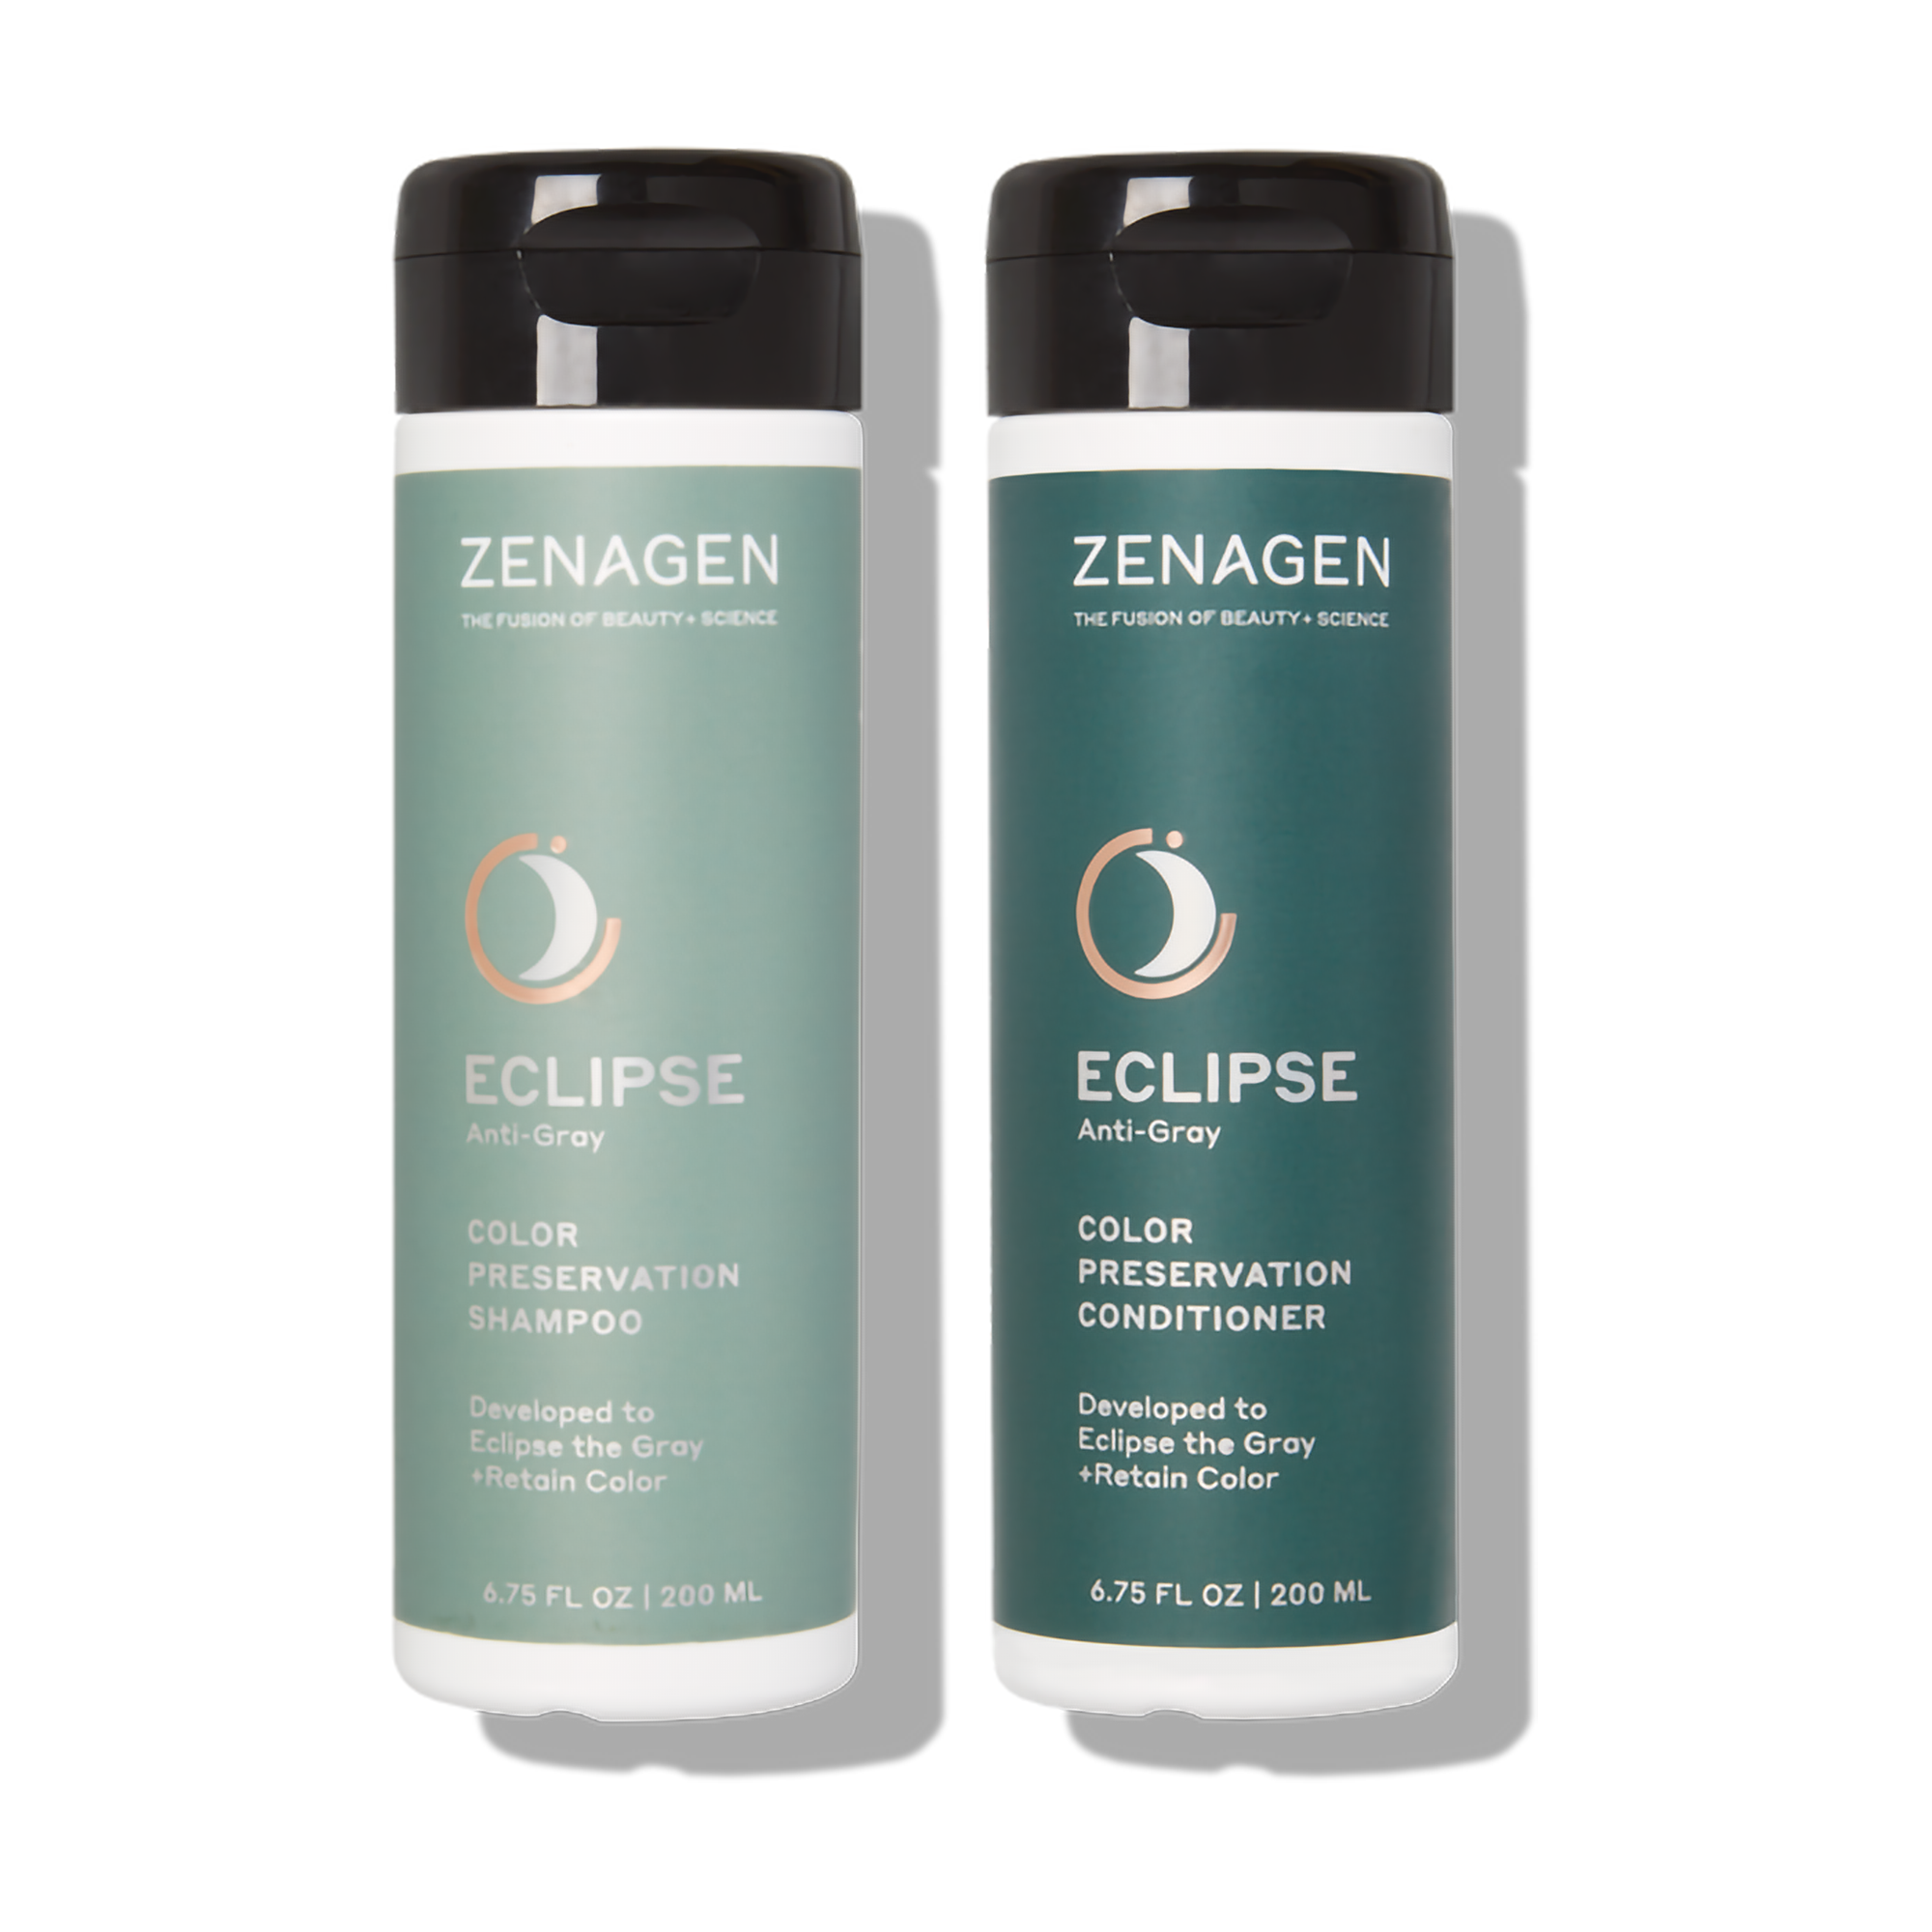 Zenagen Eclipse Anti-Gray Color Preservation Shampoo and Conditioner Duo / 6.7OZ